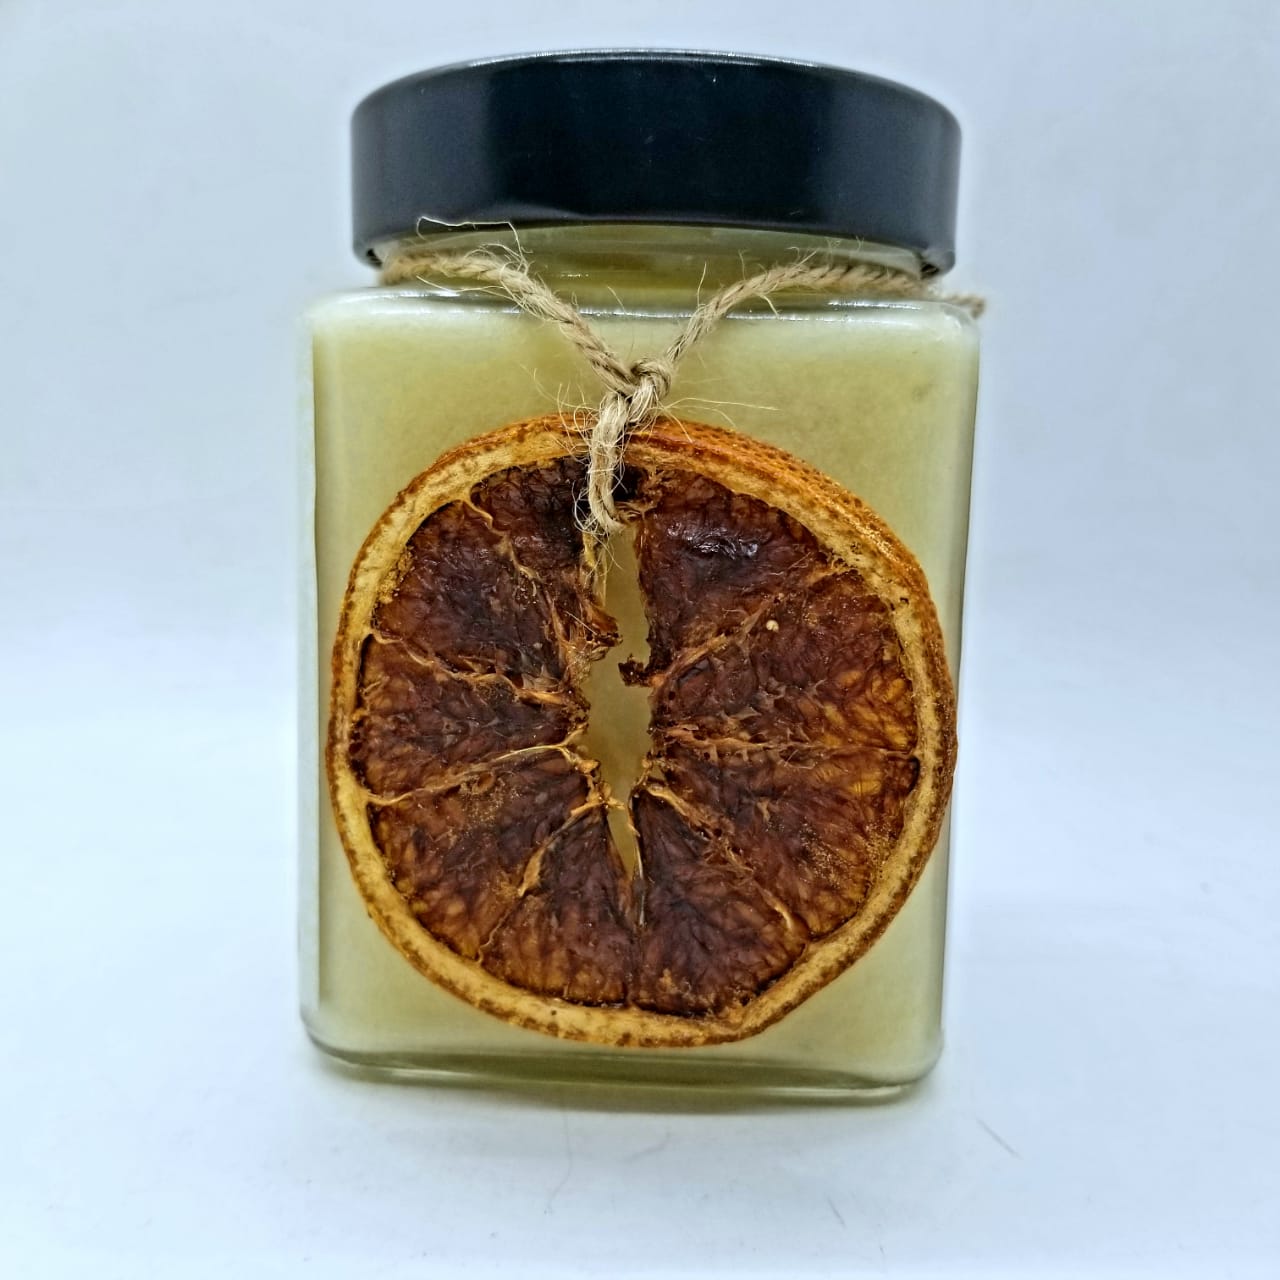 Whipped Shea and Orange Body Butter, Kedar Beauty, 550g